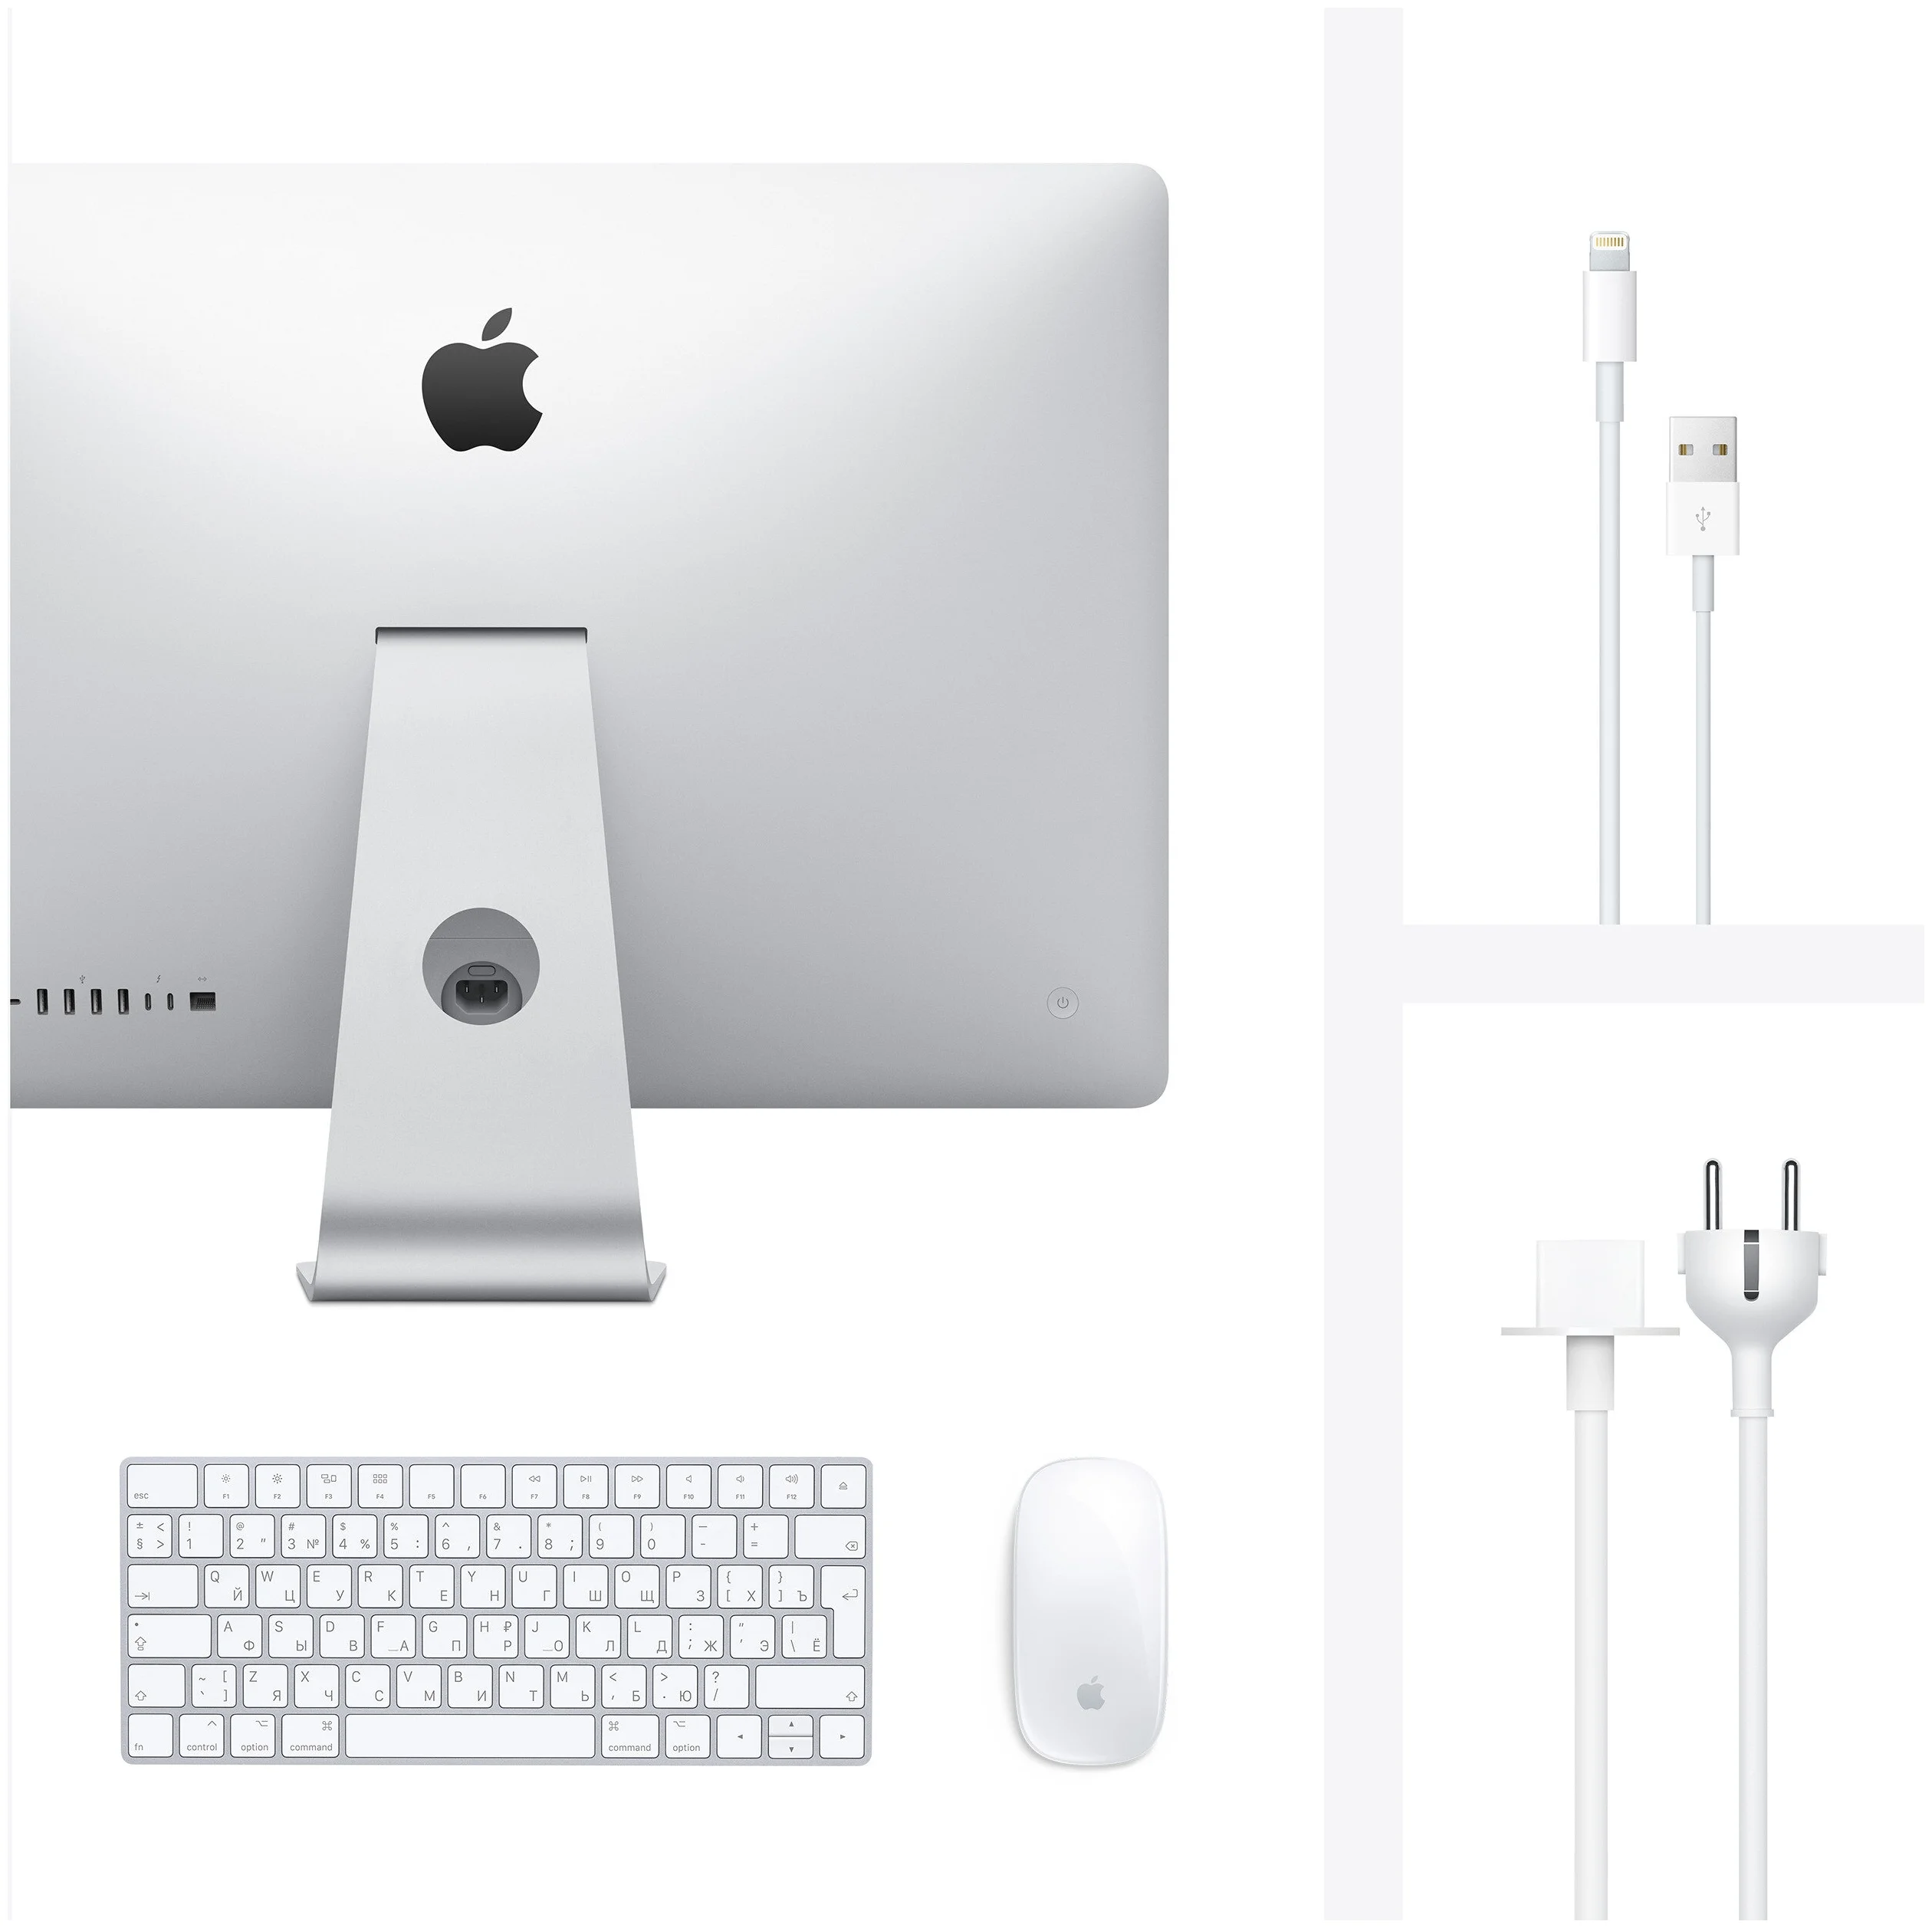 27" Apple iMac (Retina 5K, середина 2020 г.) - накопитель: HDD 512 ГБ, 256 ГБ, без HDD, SSD 16 ГБ, 1 ТБ, 8 ГБ, 512 ГБ, 256 ГБ